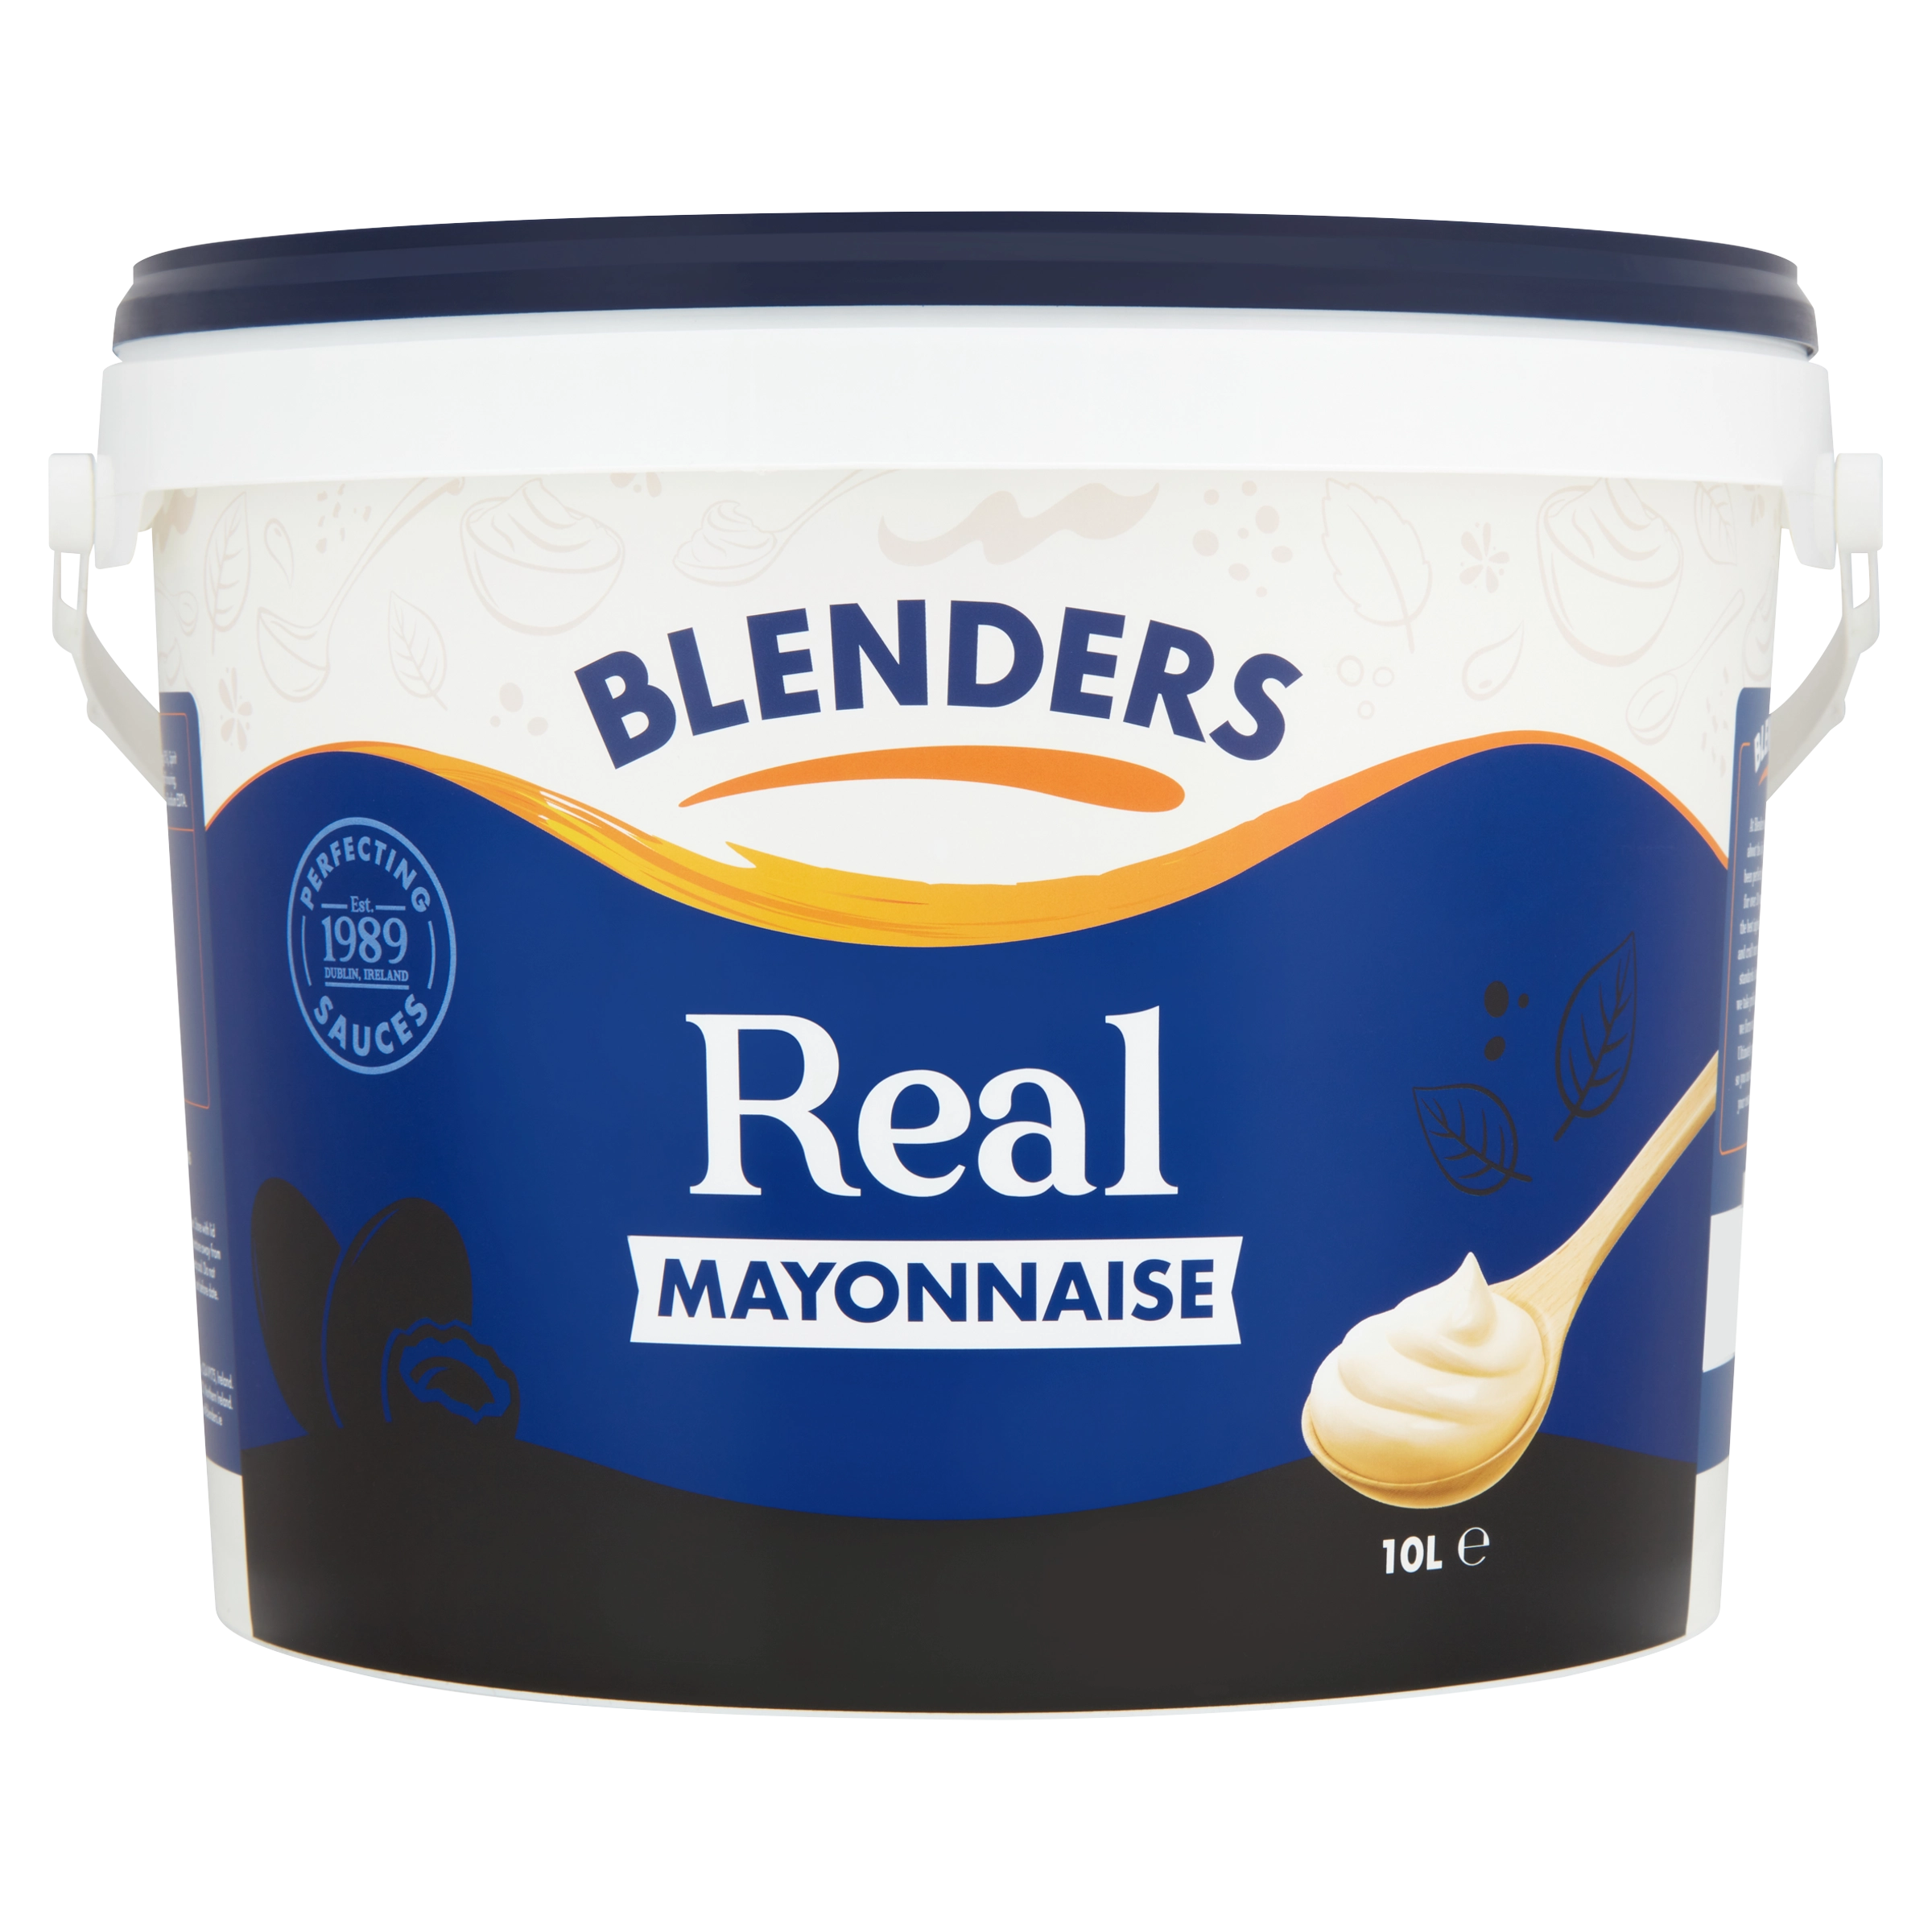 Blenders Real mayonnaise 10L